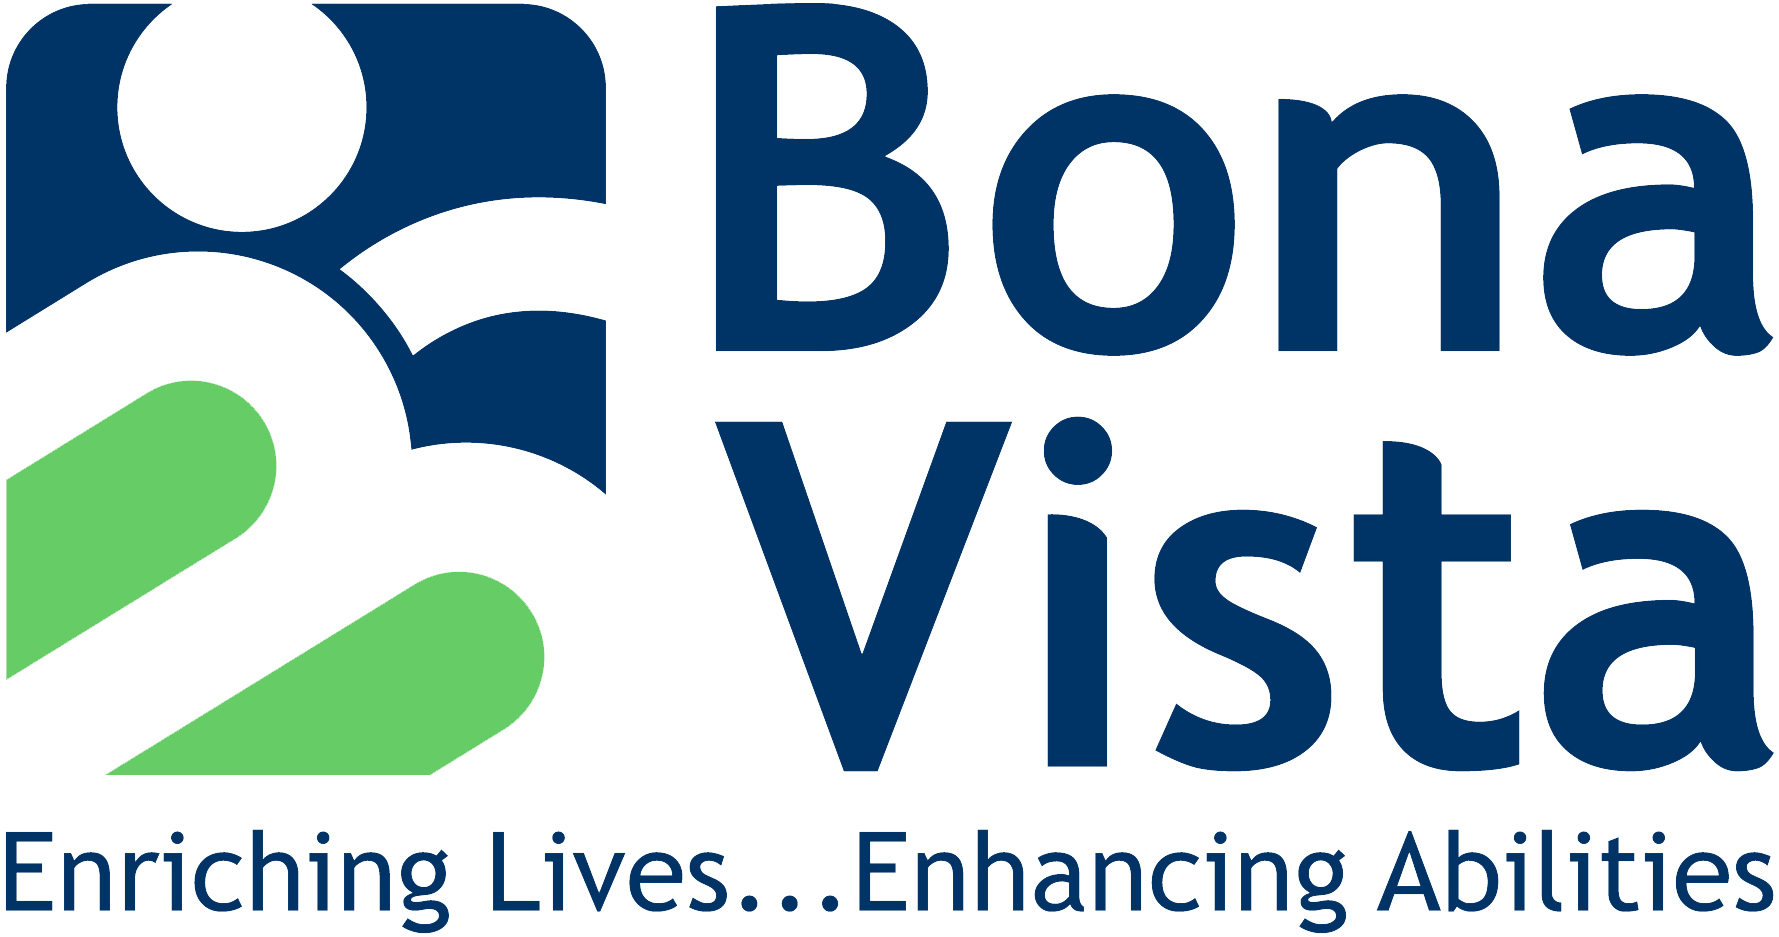 Bona Vista Logo